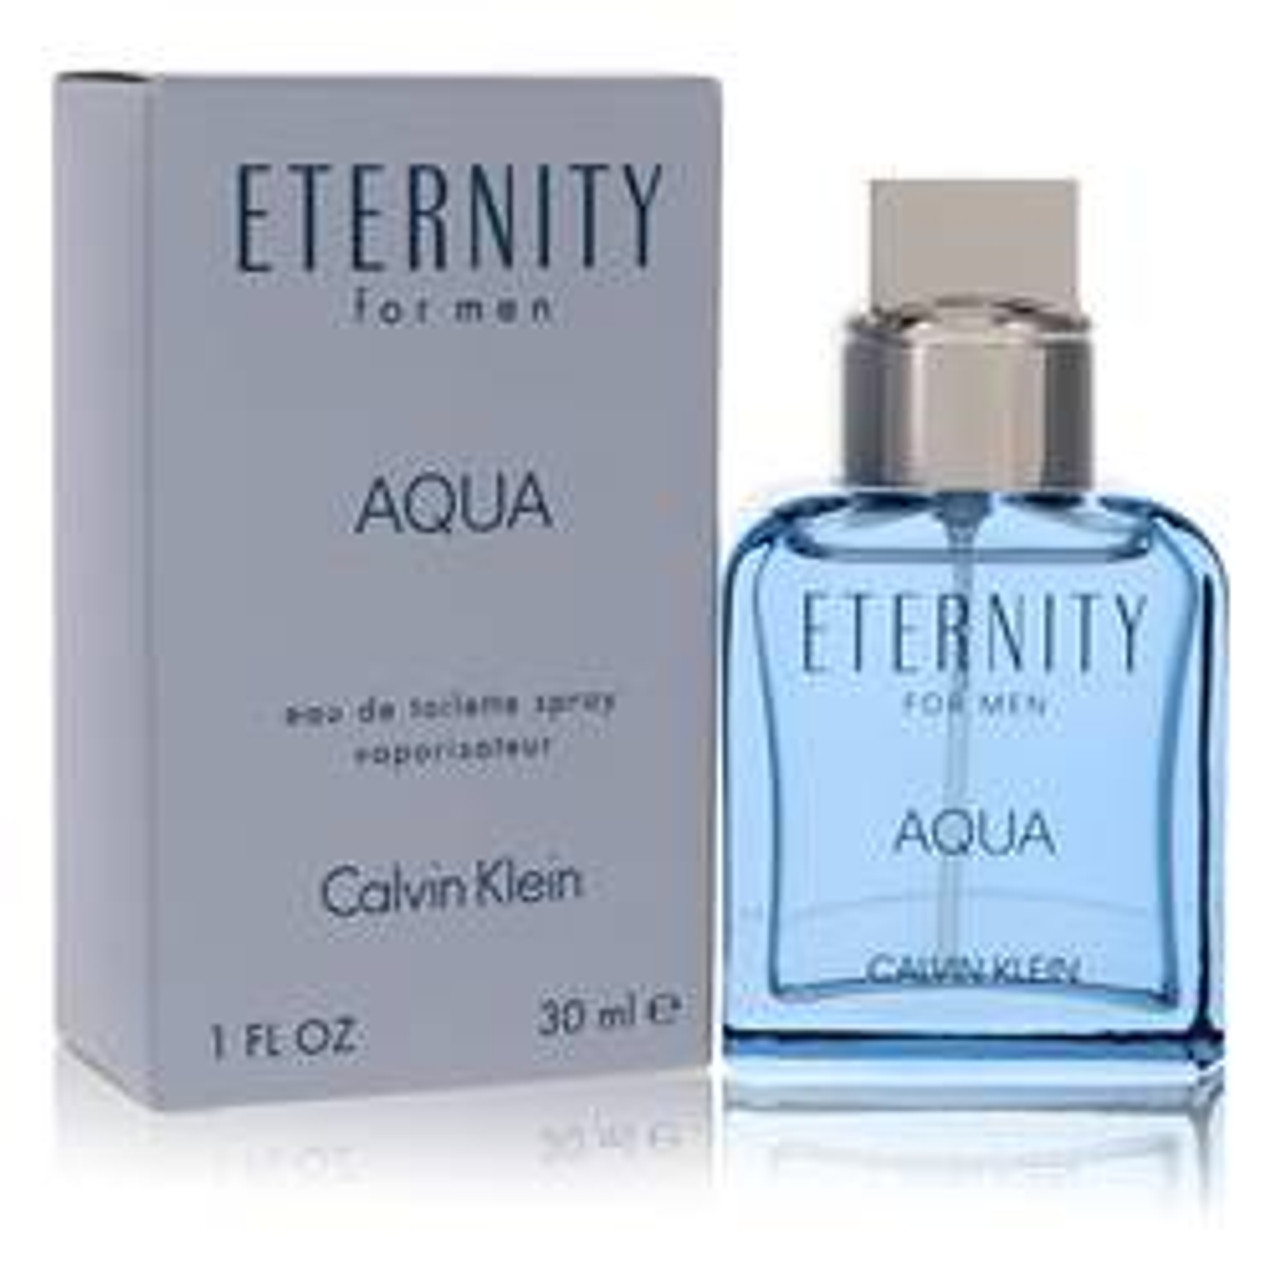 Eternity Aqua Cologne By Calvin Klein Eau De Toilette Spray 1 oz for Men - [From 59.00 - Choose pk Qty ] - *Ships from Miami